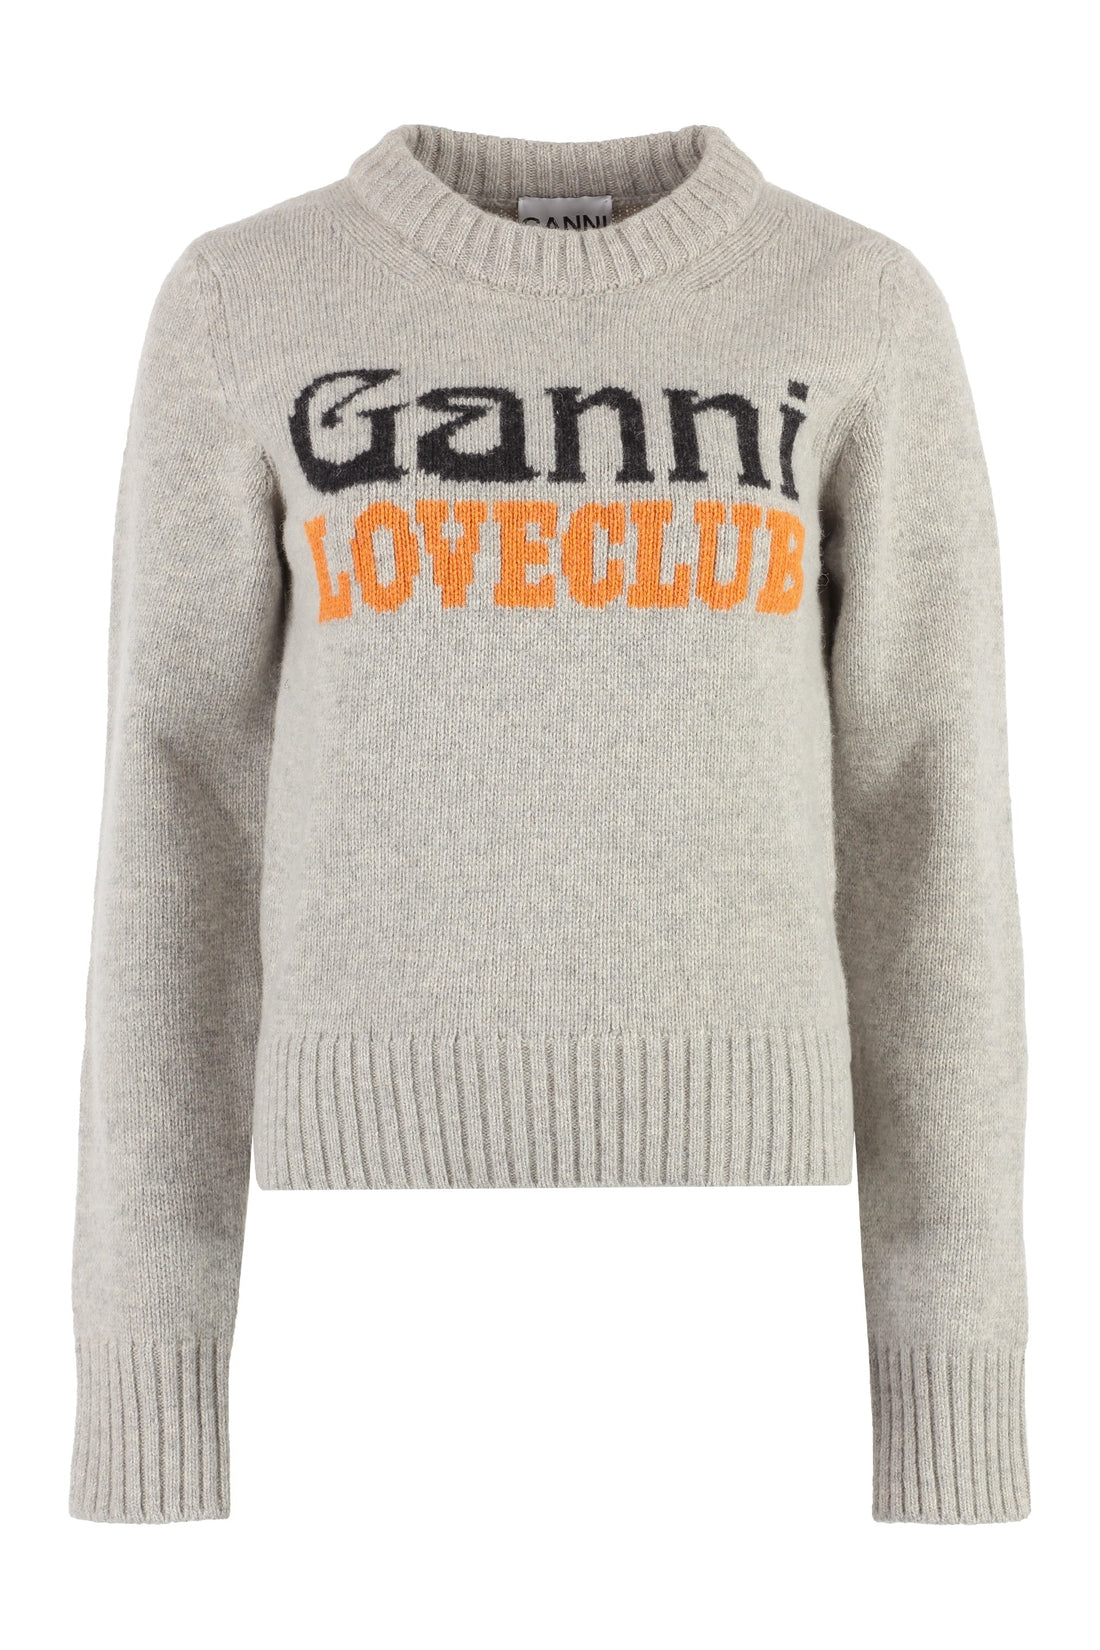 GANNI-OUTLET-SALE-Wool blend sweater-ARCHIVIST